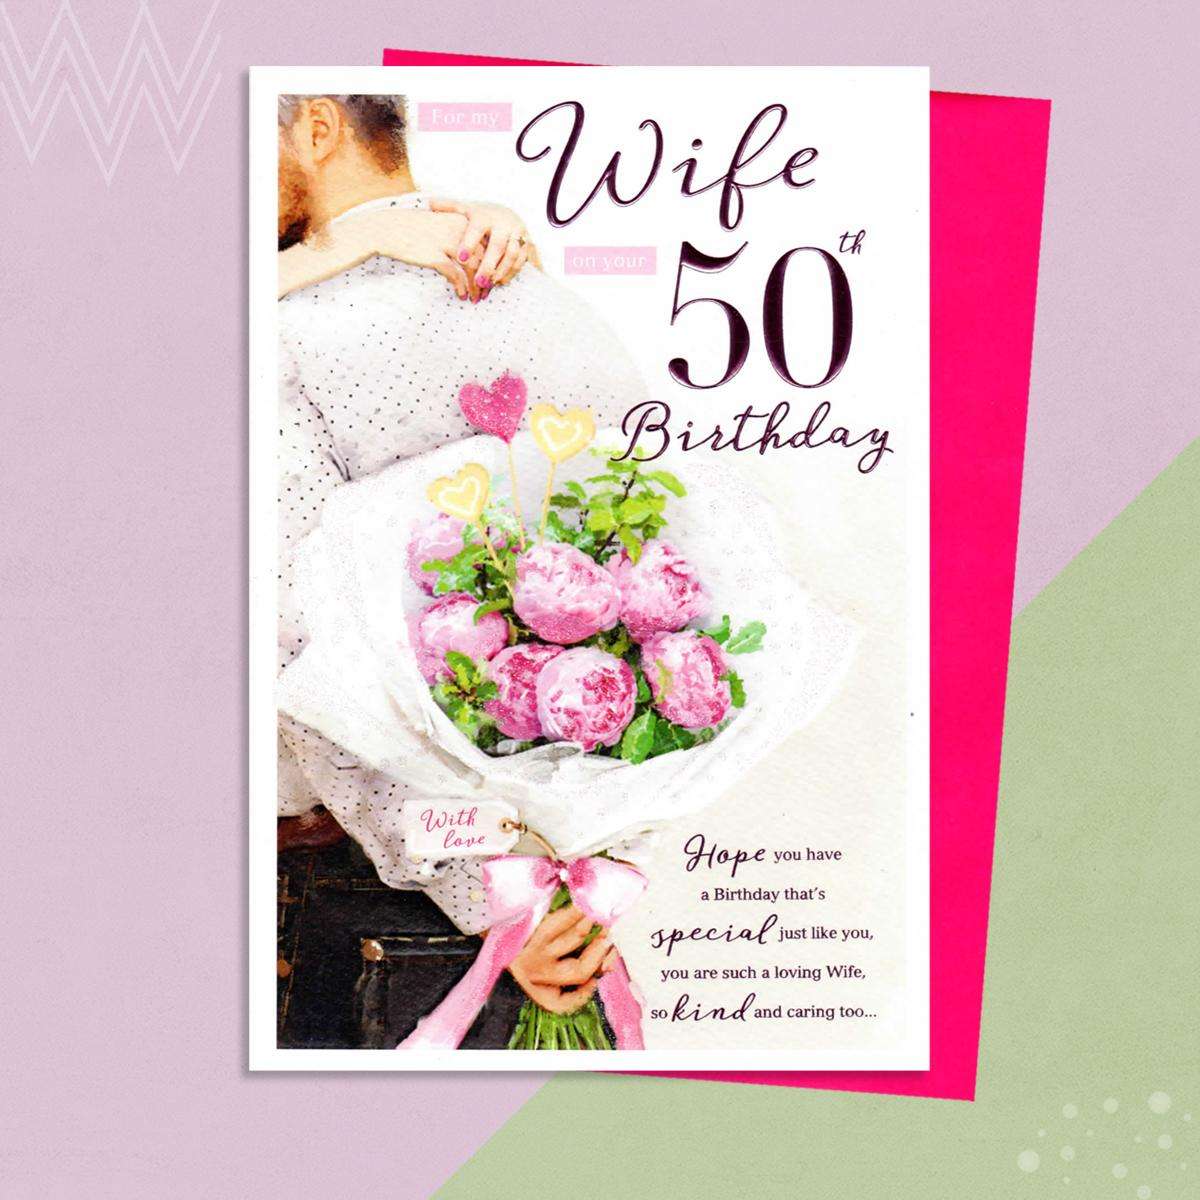 Wonderful Wife On Your 50th Birthday Card